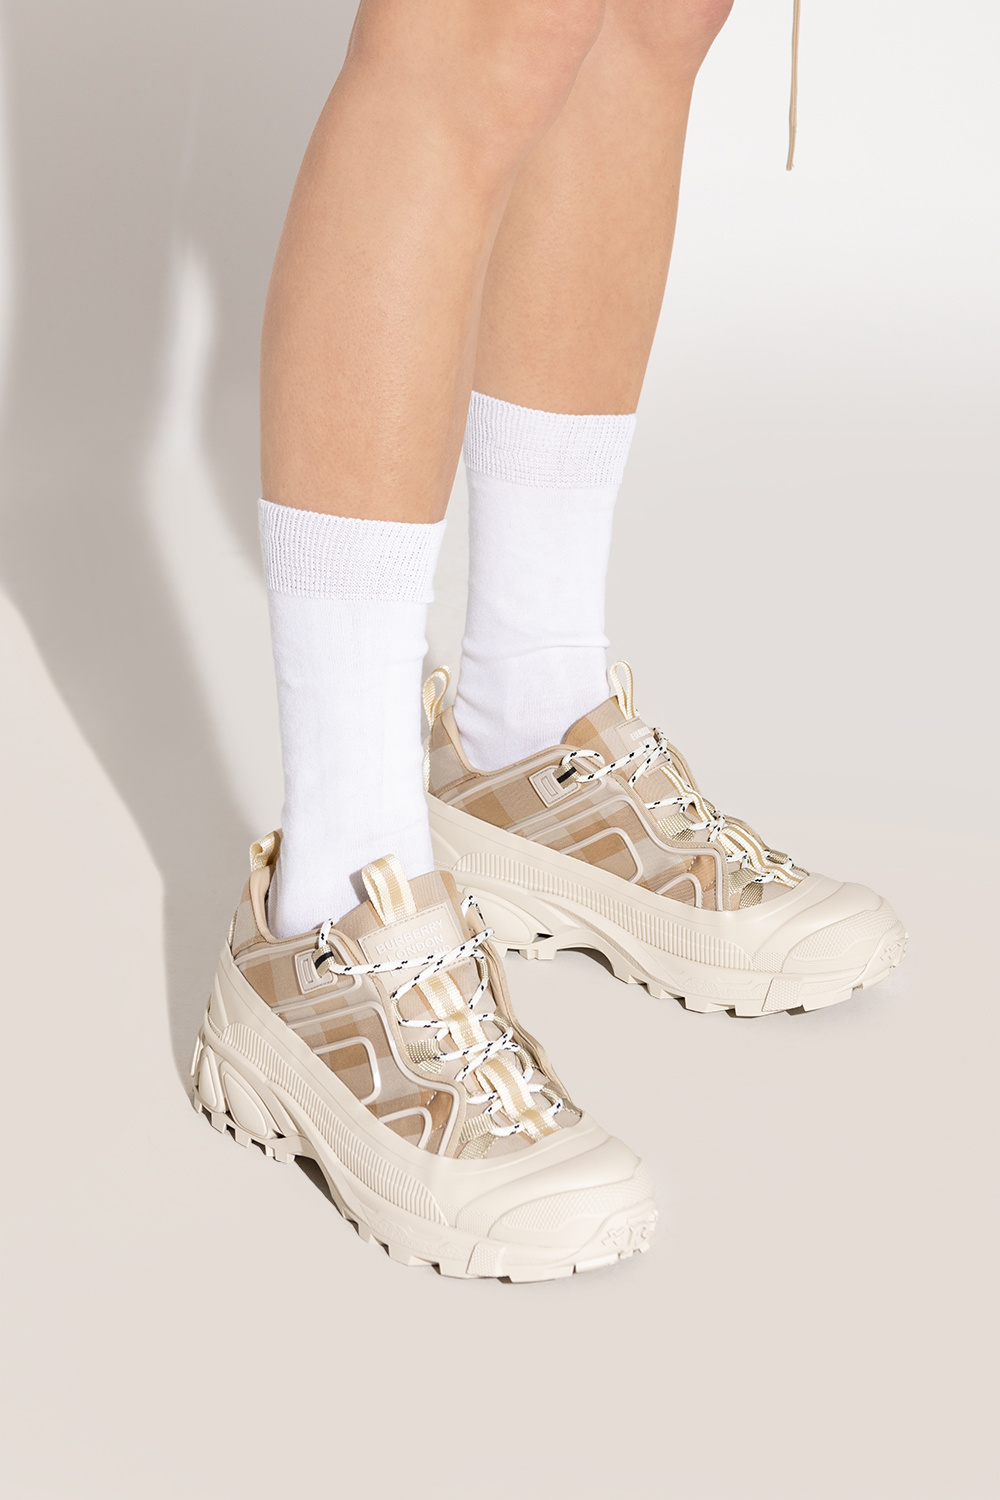 burberry item Platform sneakers